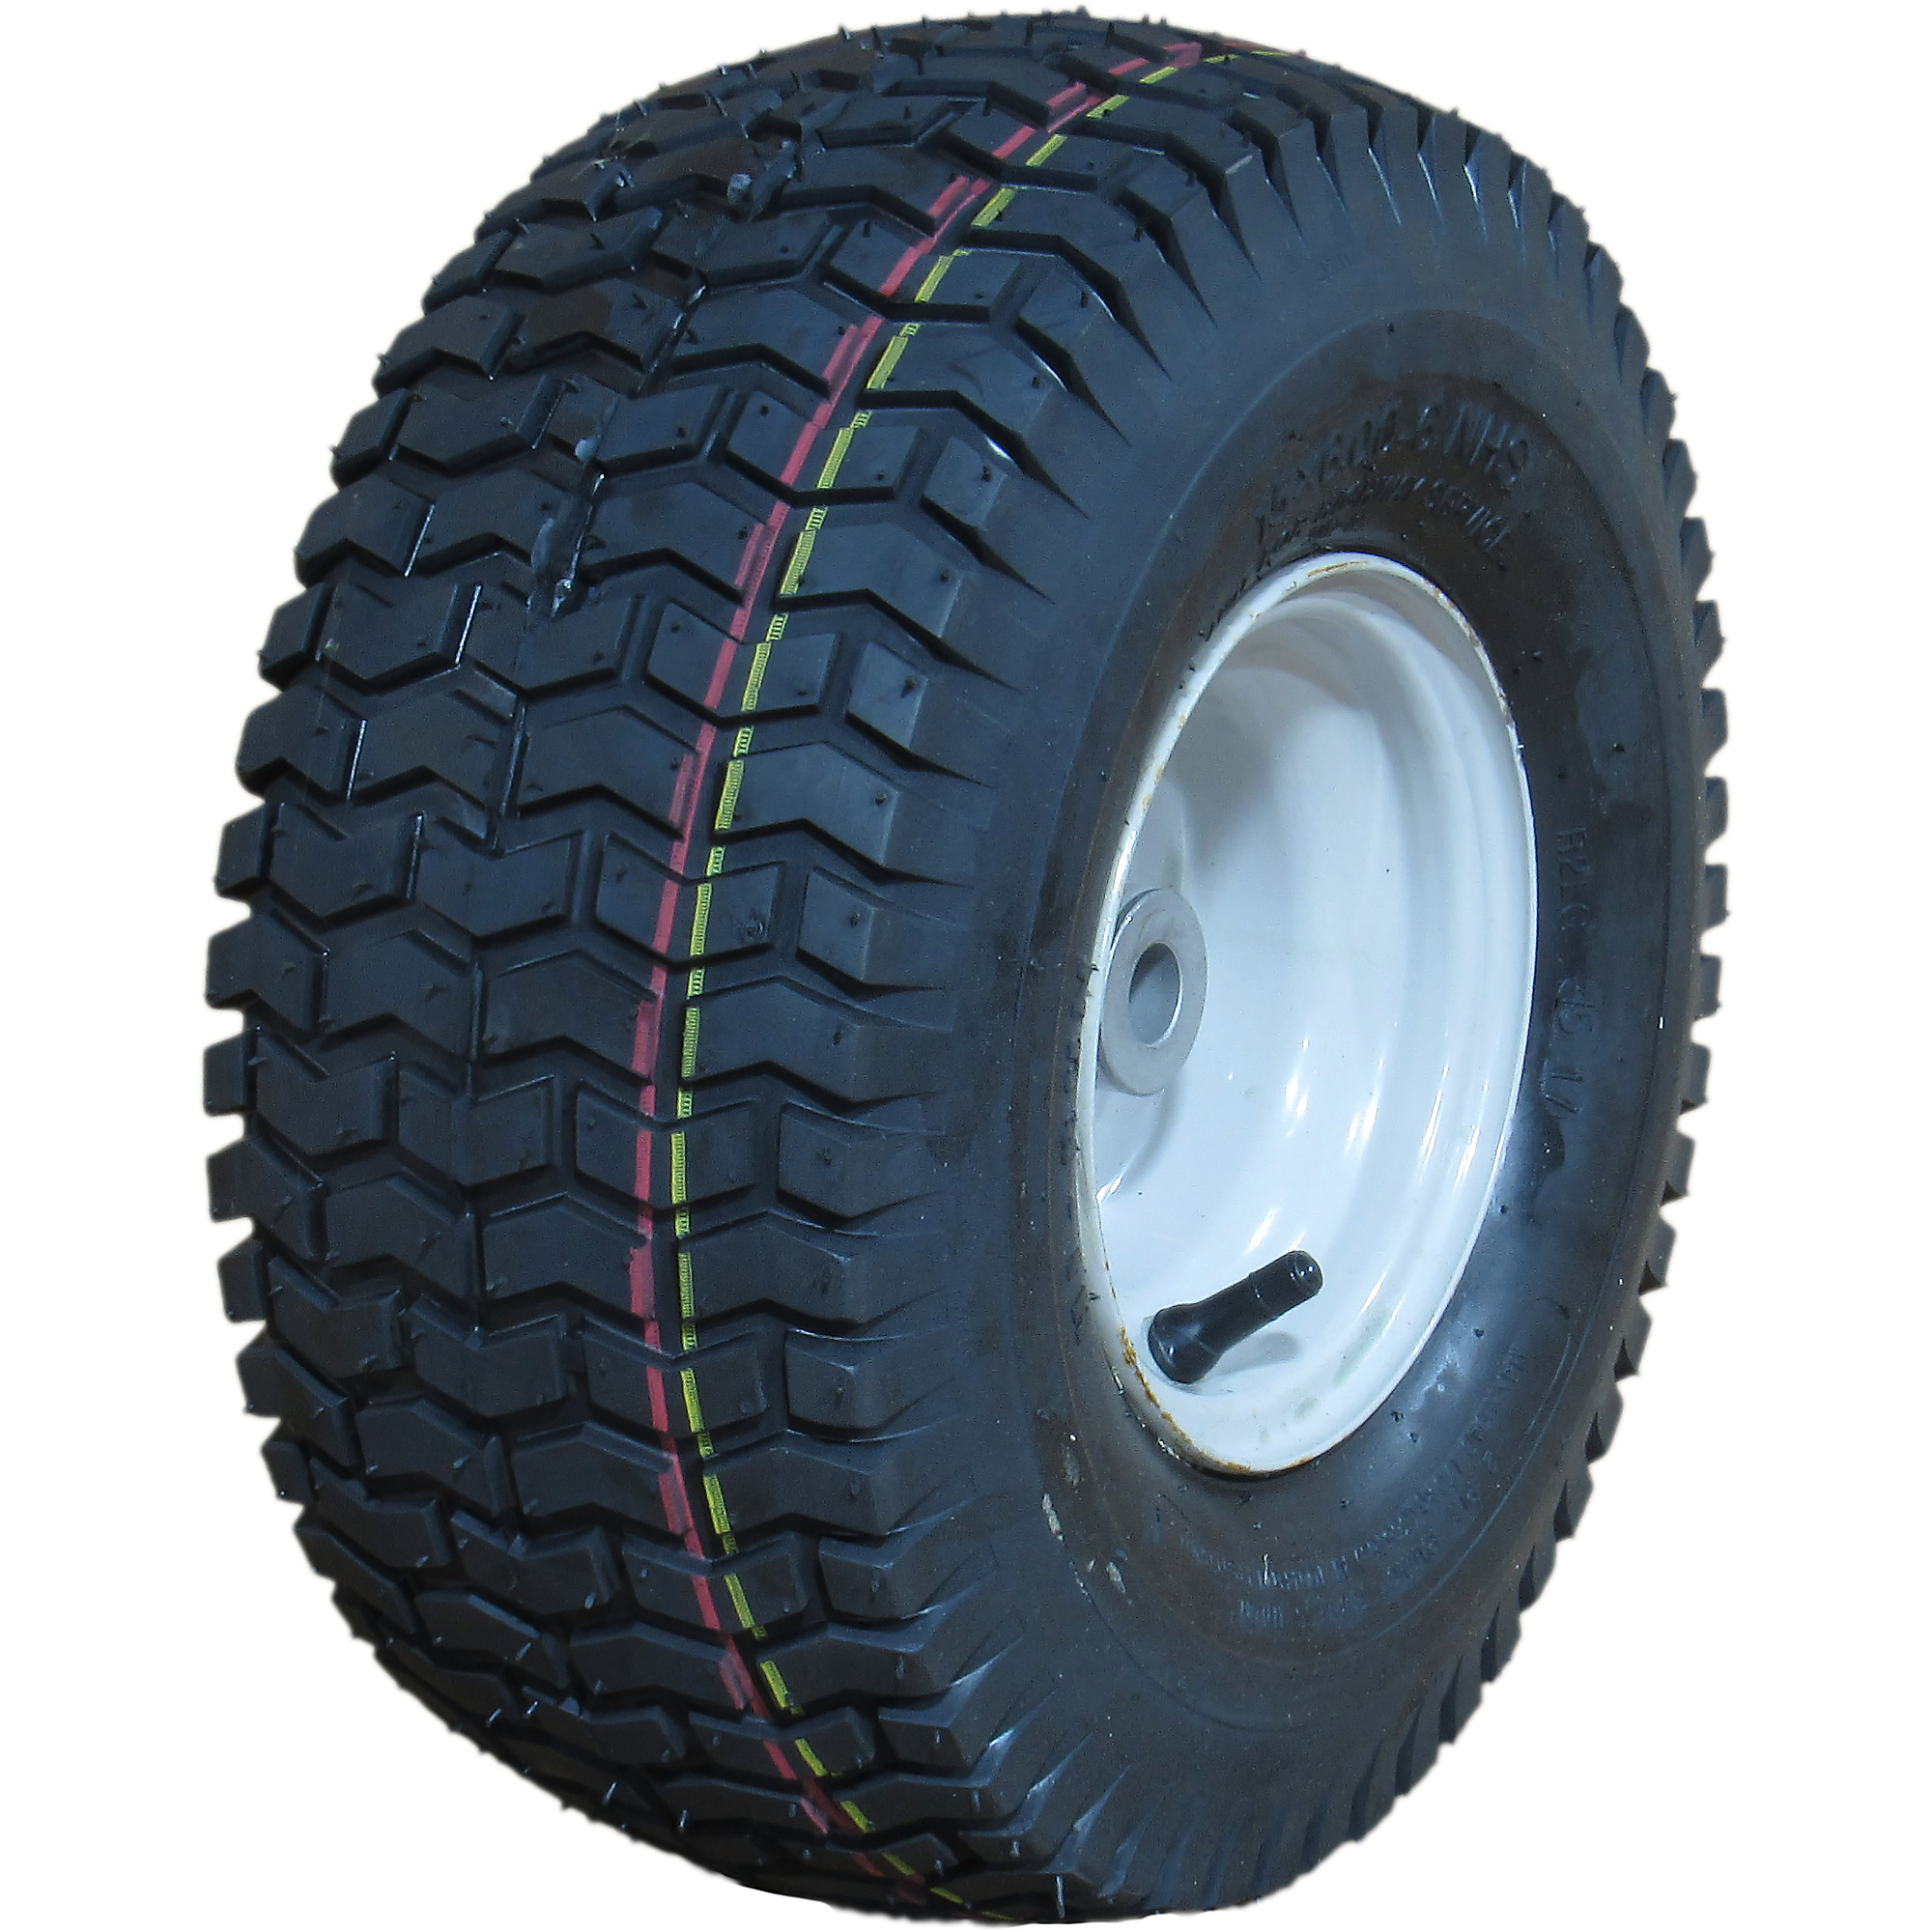 HI-RUN, Lawn Garden Tire Assembly, SU12 Turf II, 3/4InchID, Tire Size 15X6.00-6 Load Range Rating A, Model ASB1088